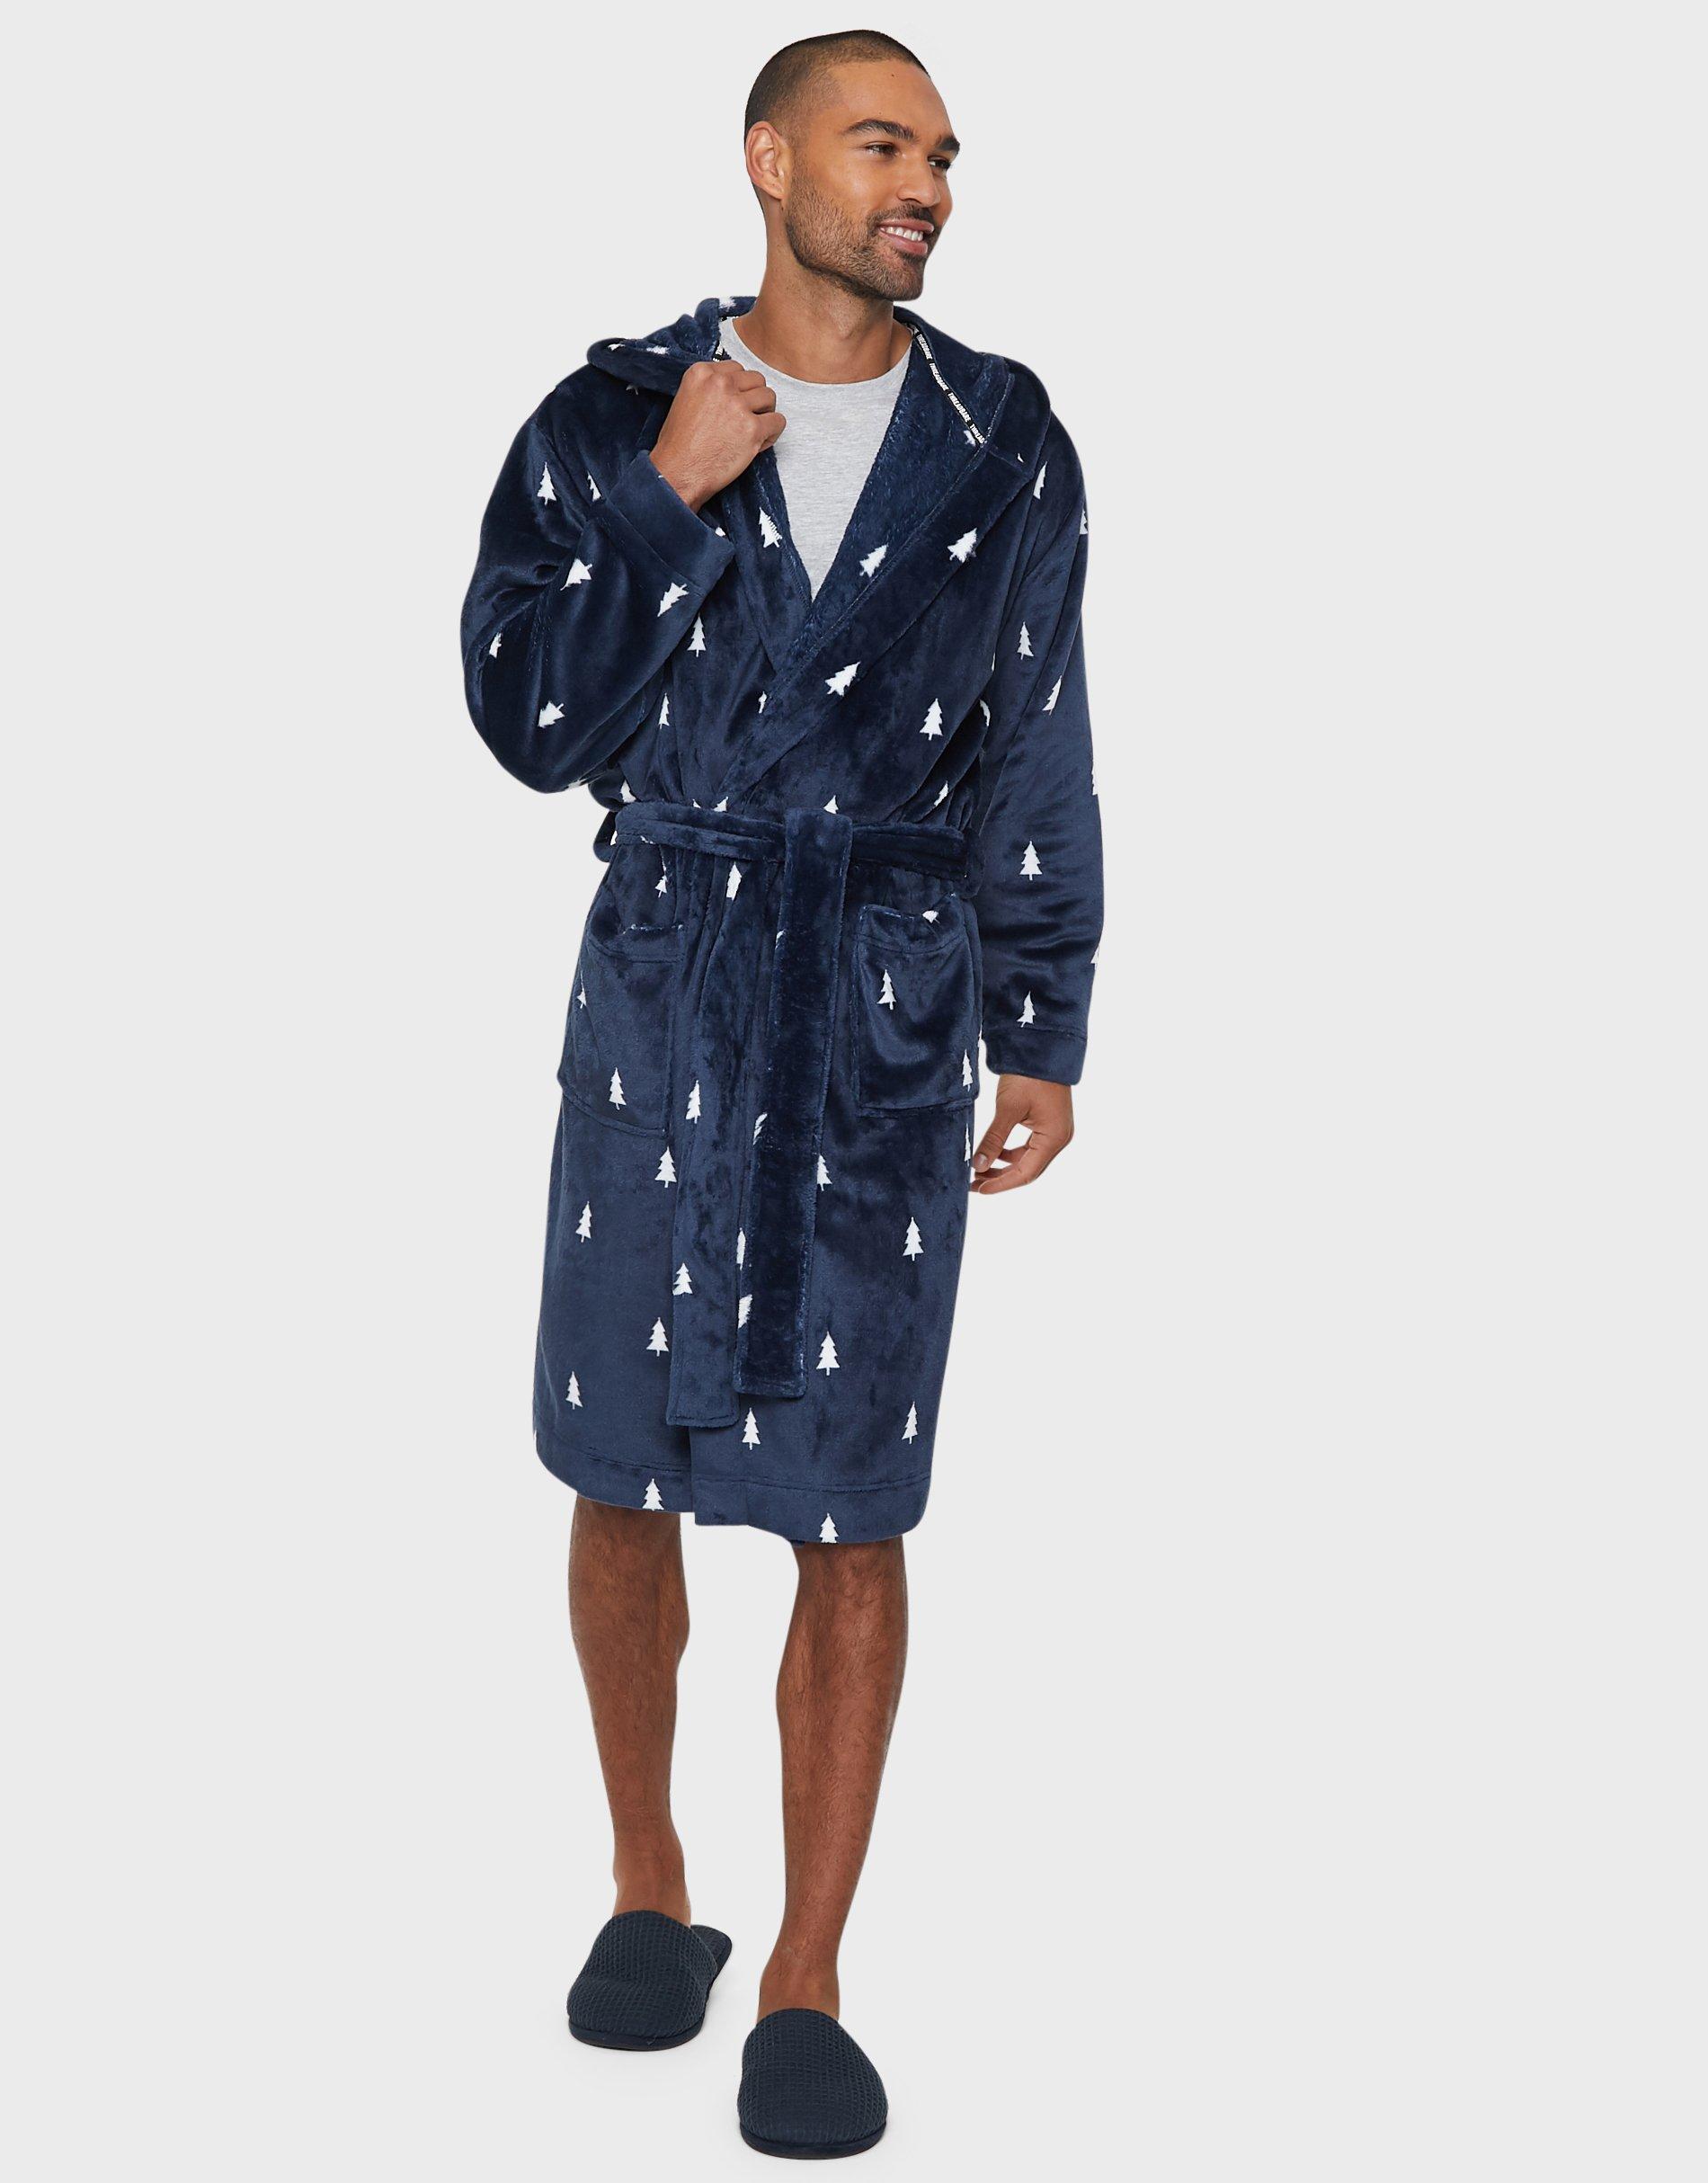 Men's Luxury Robes And Pajamas | Baturina Homewear